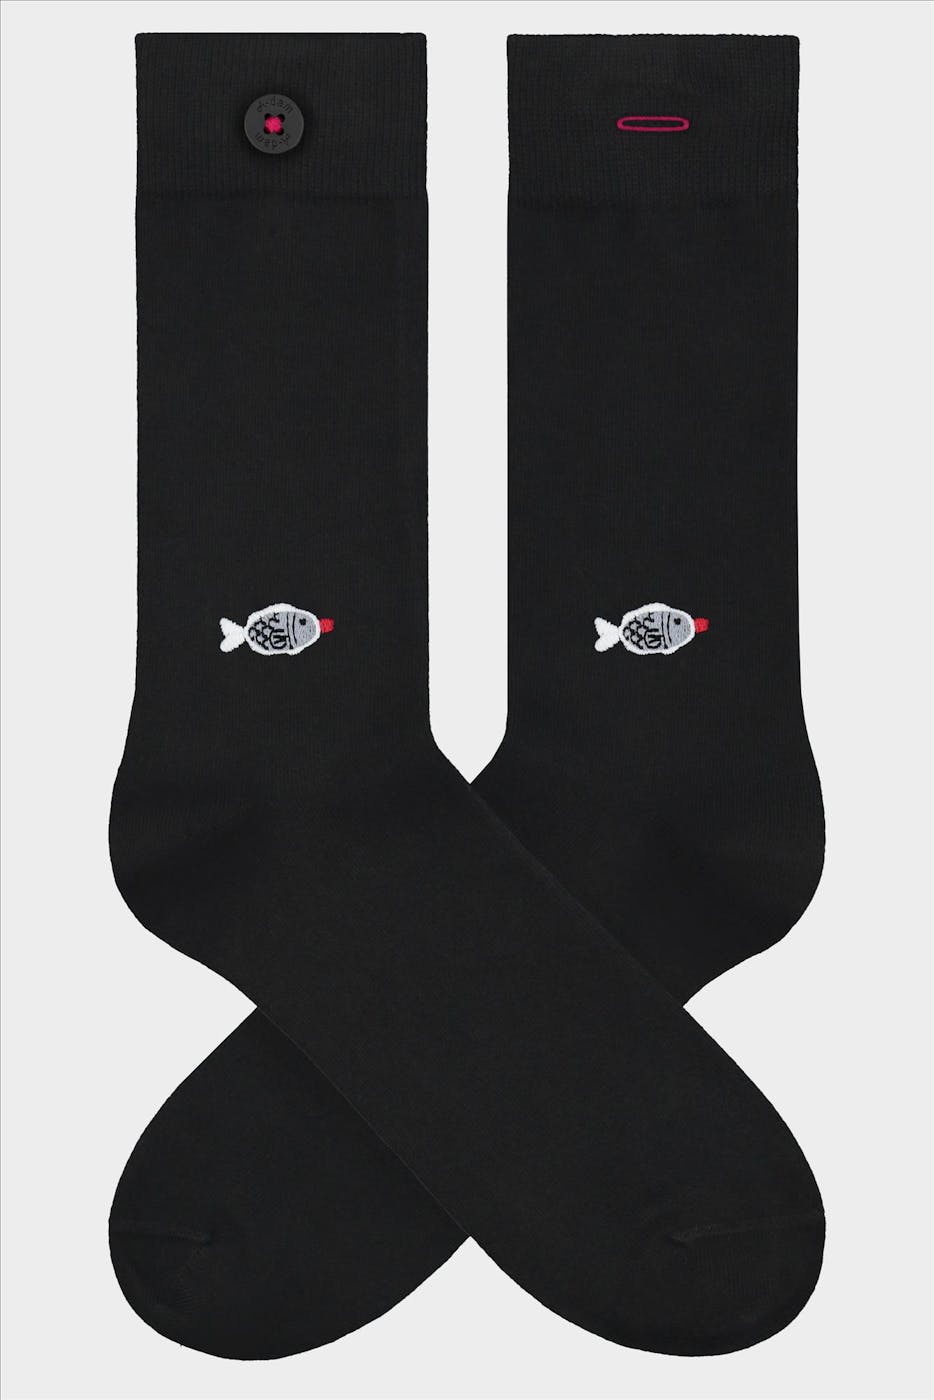 A'dam - Zwarte Dorien sokken, maat: 36-40